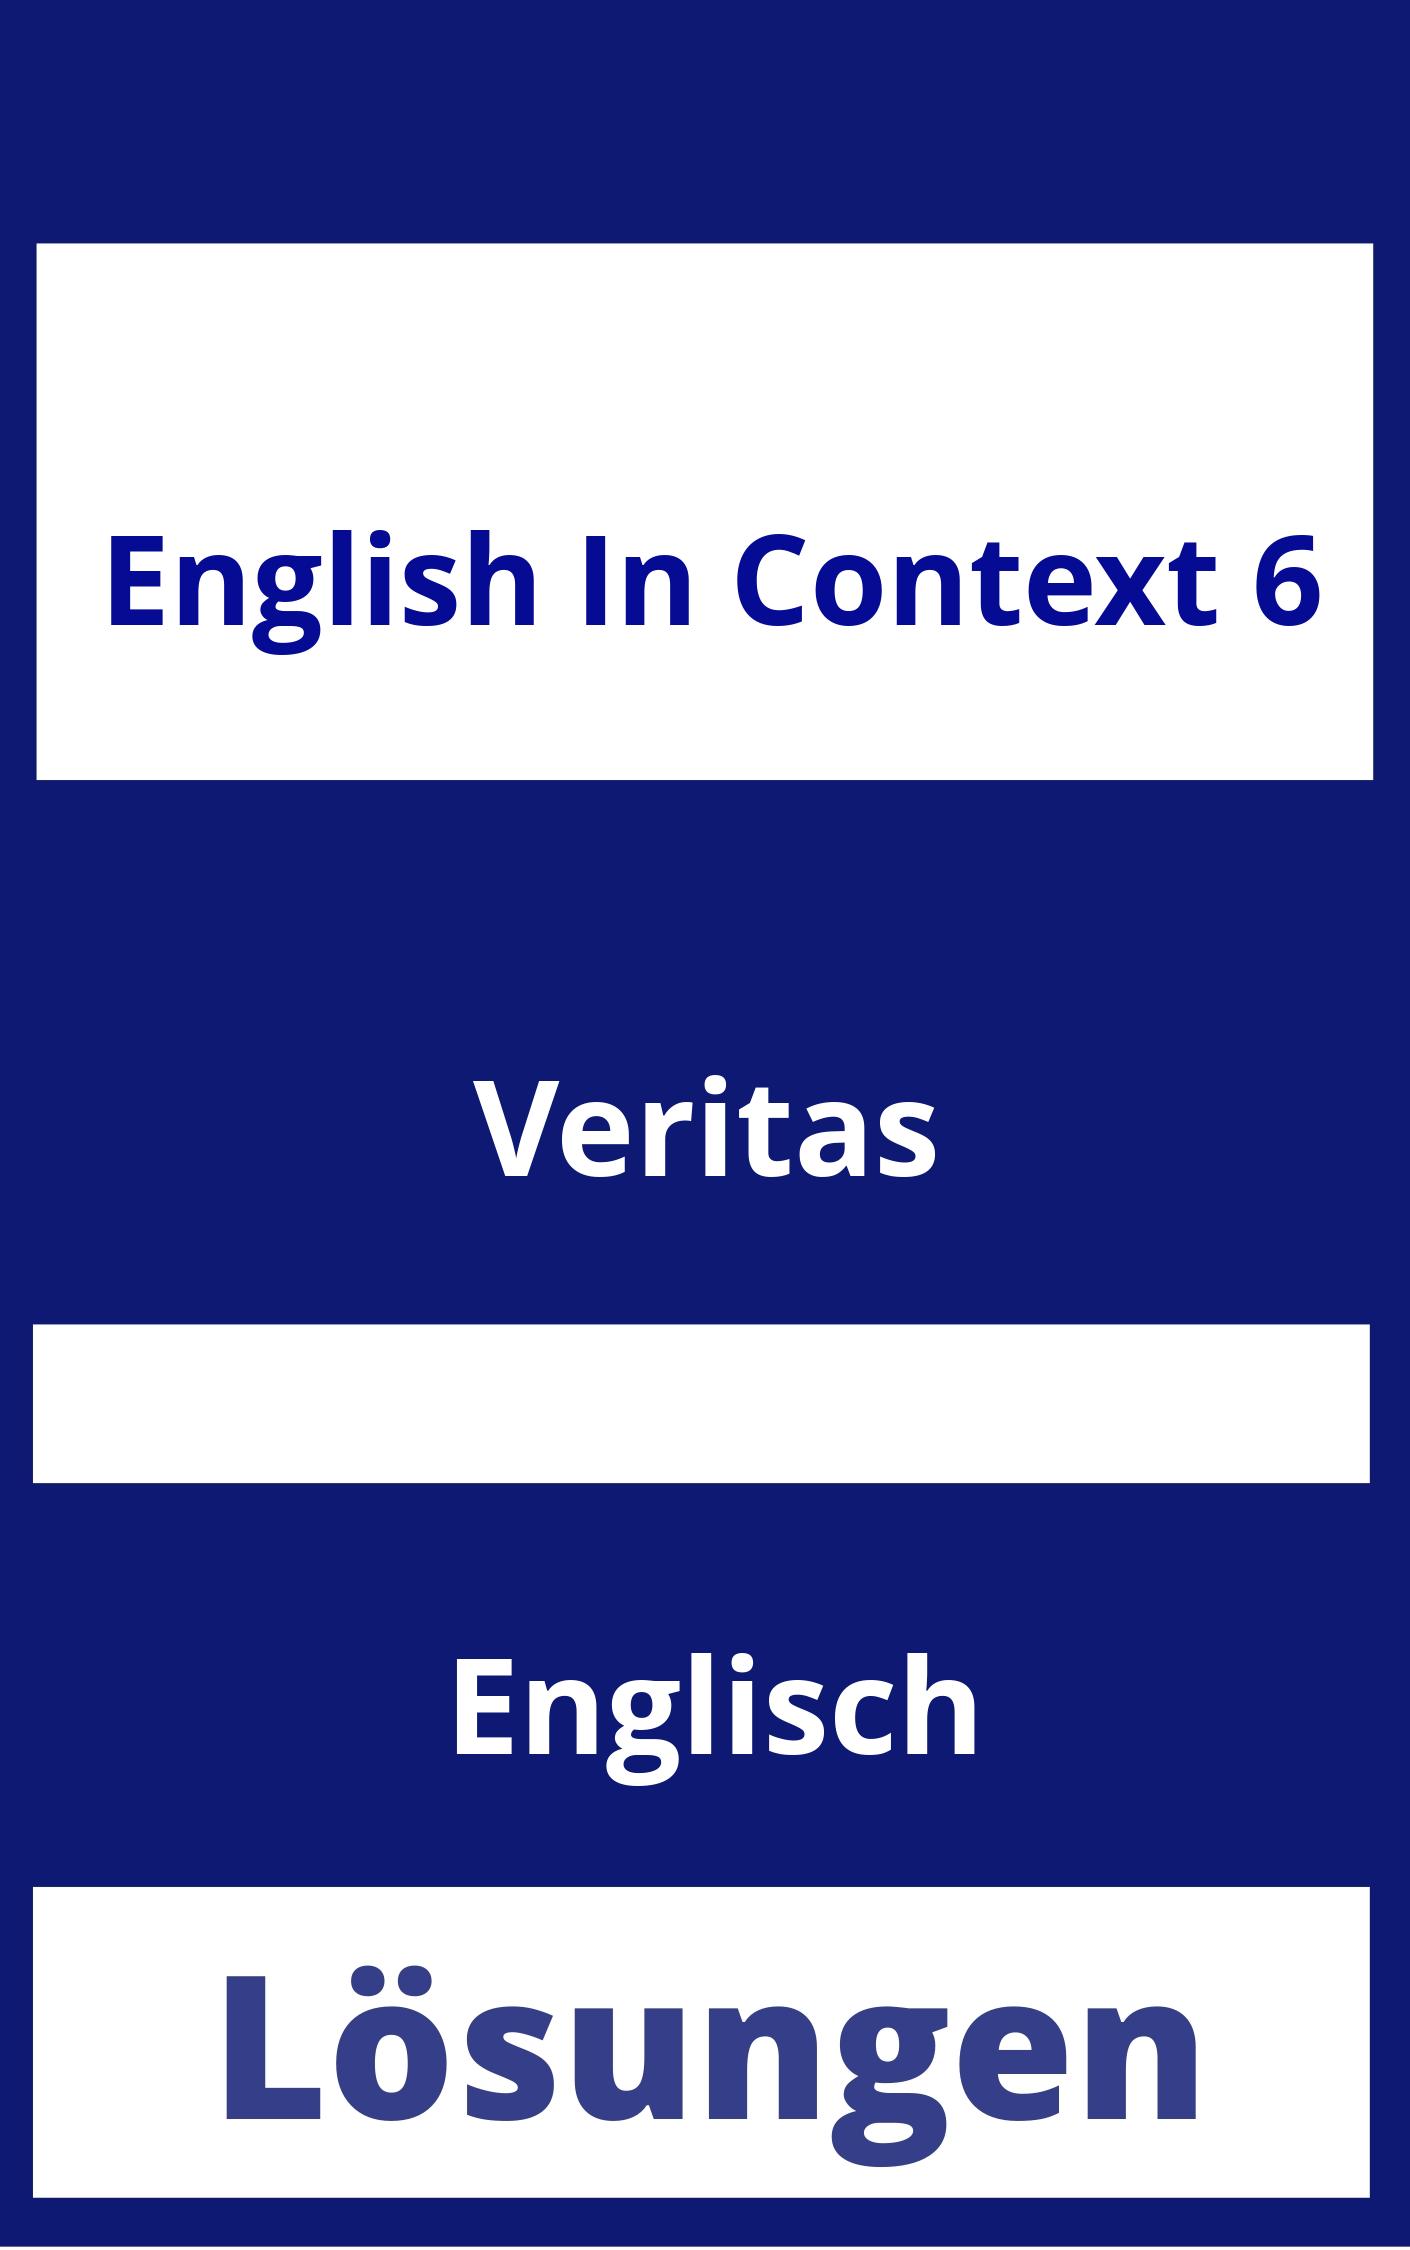 English in Context 6 Lösungen PDF